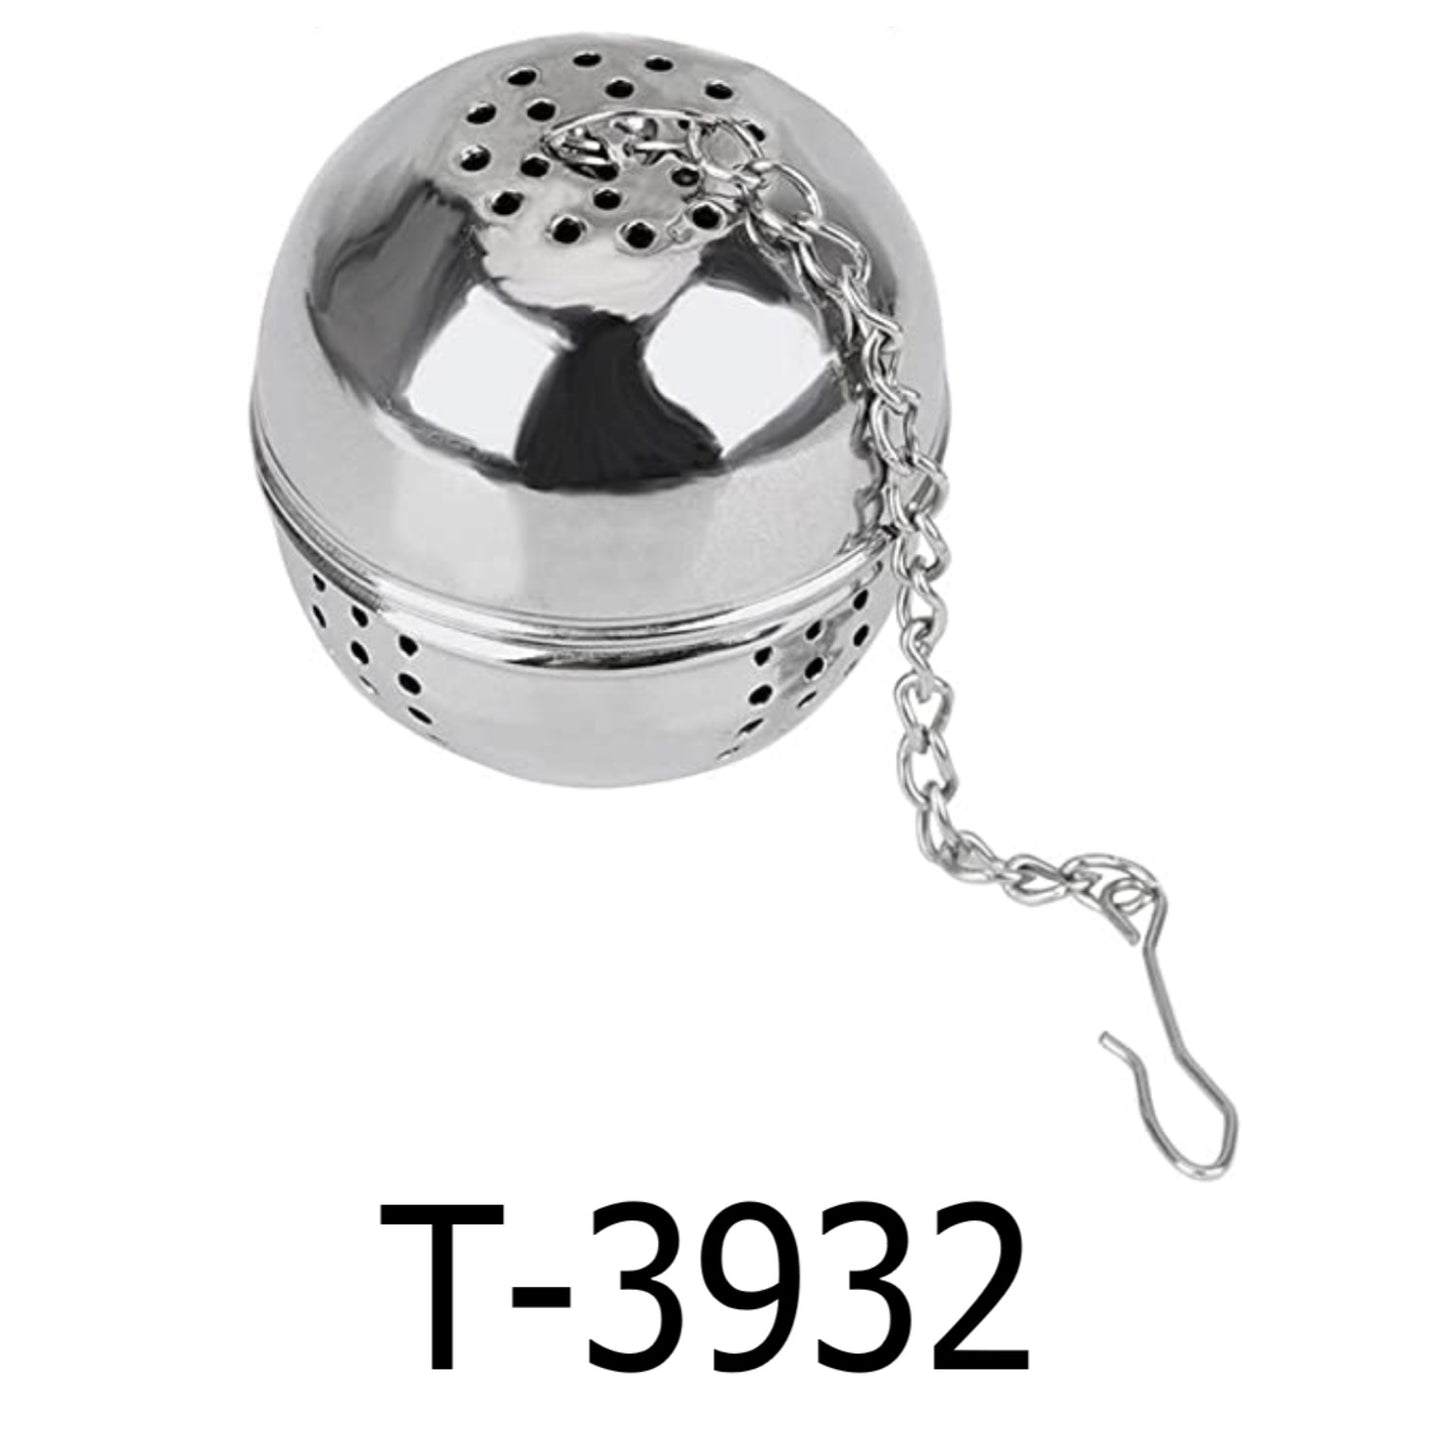 2 PC Stainless Steel Tea Ball